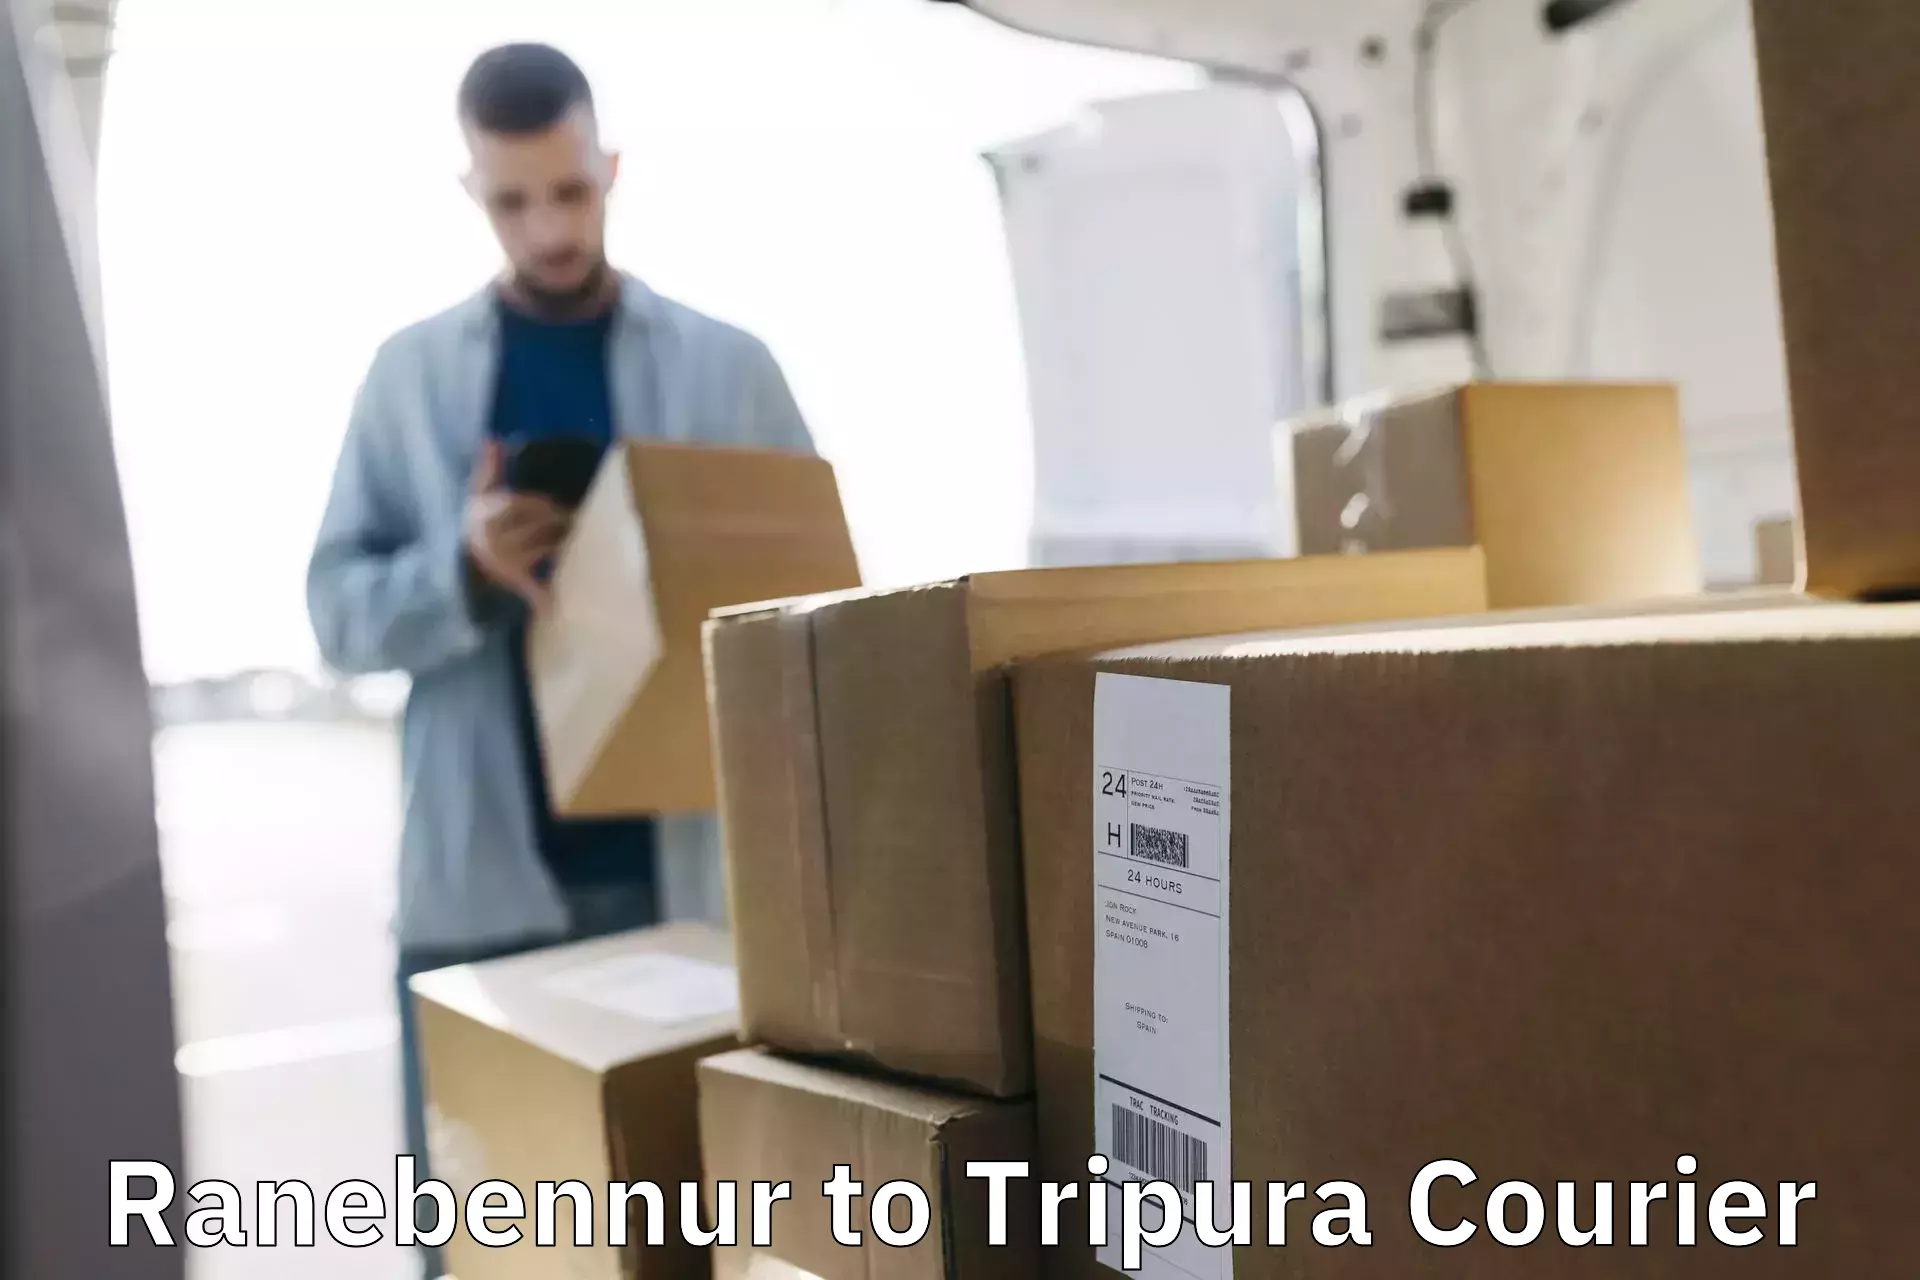 Pharmaceutical courier Ranebennur to Udaipur Tripura